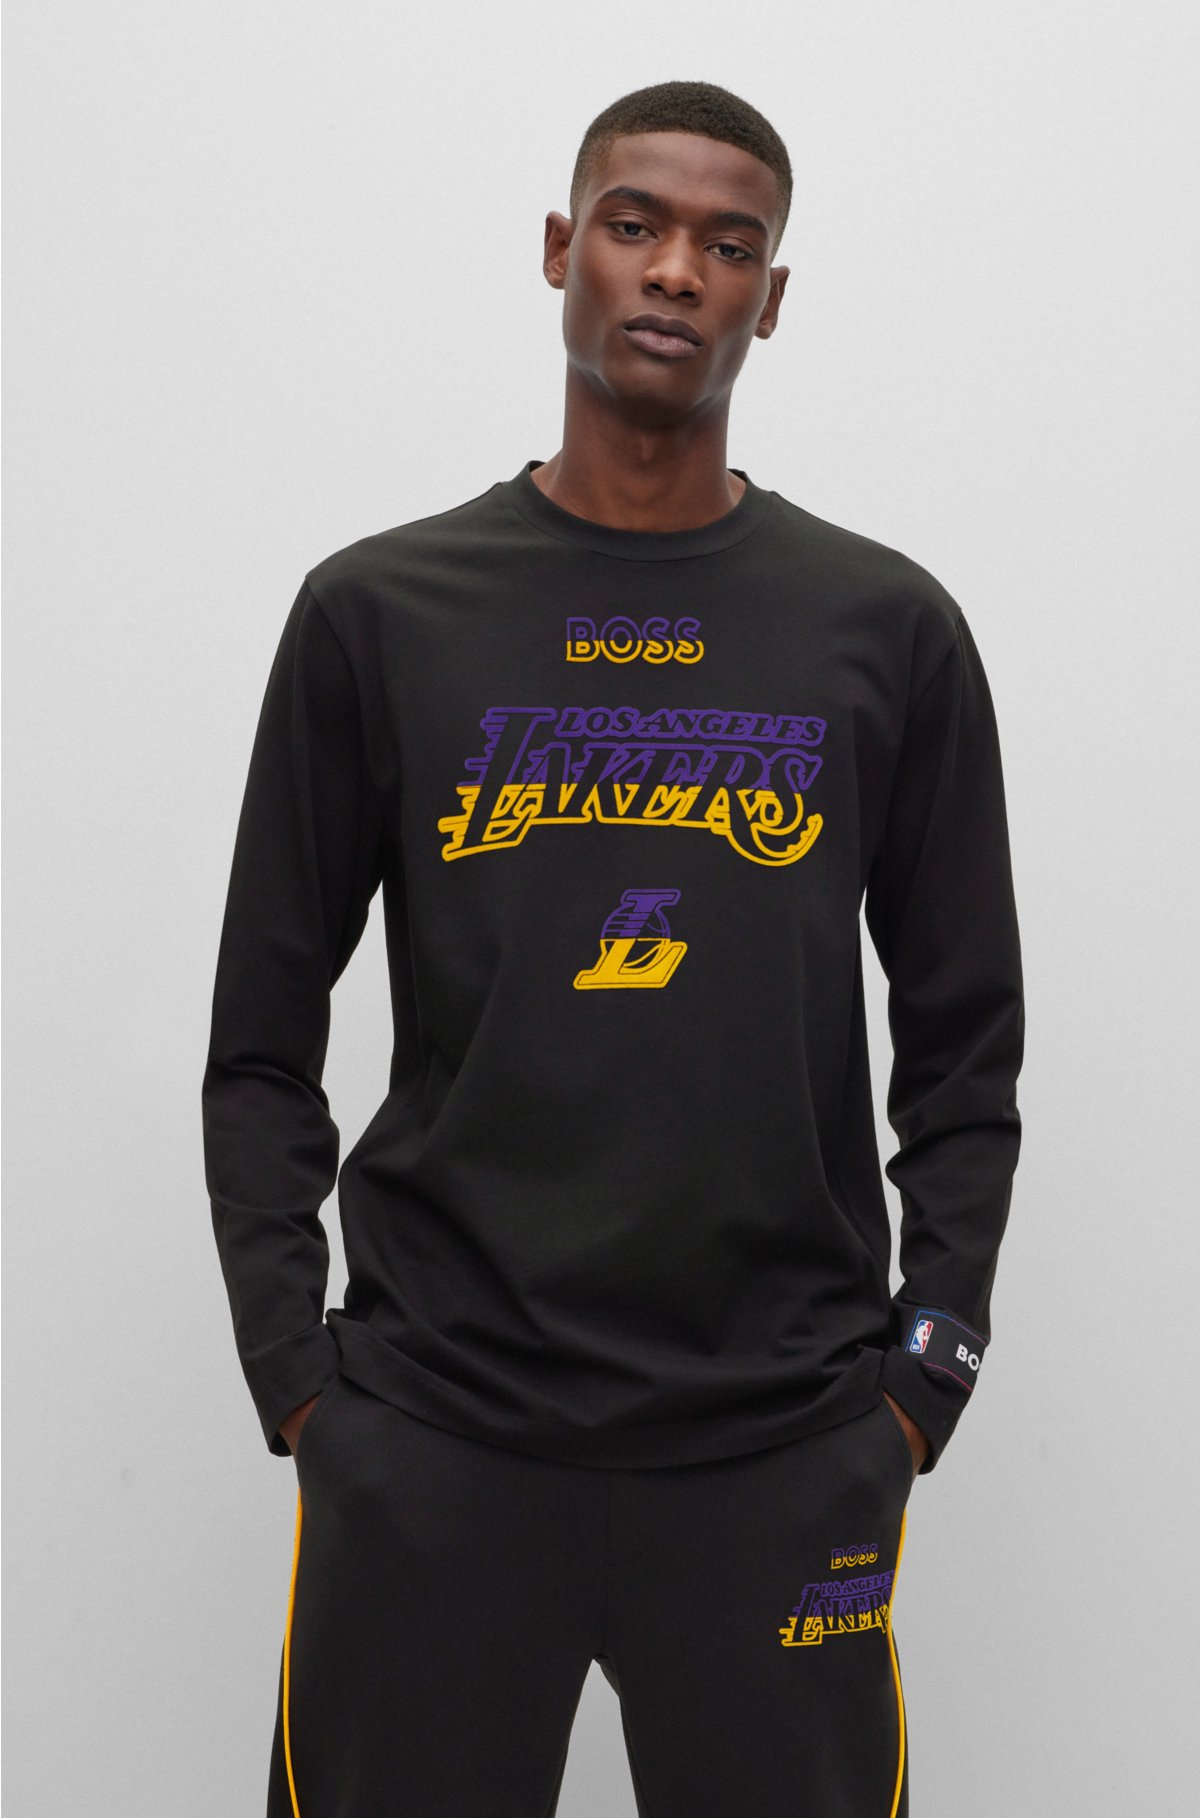 Los Angeles Lakers Long Sleeve T-Shirts, Lakers Long-Sleeved Shirt